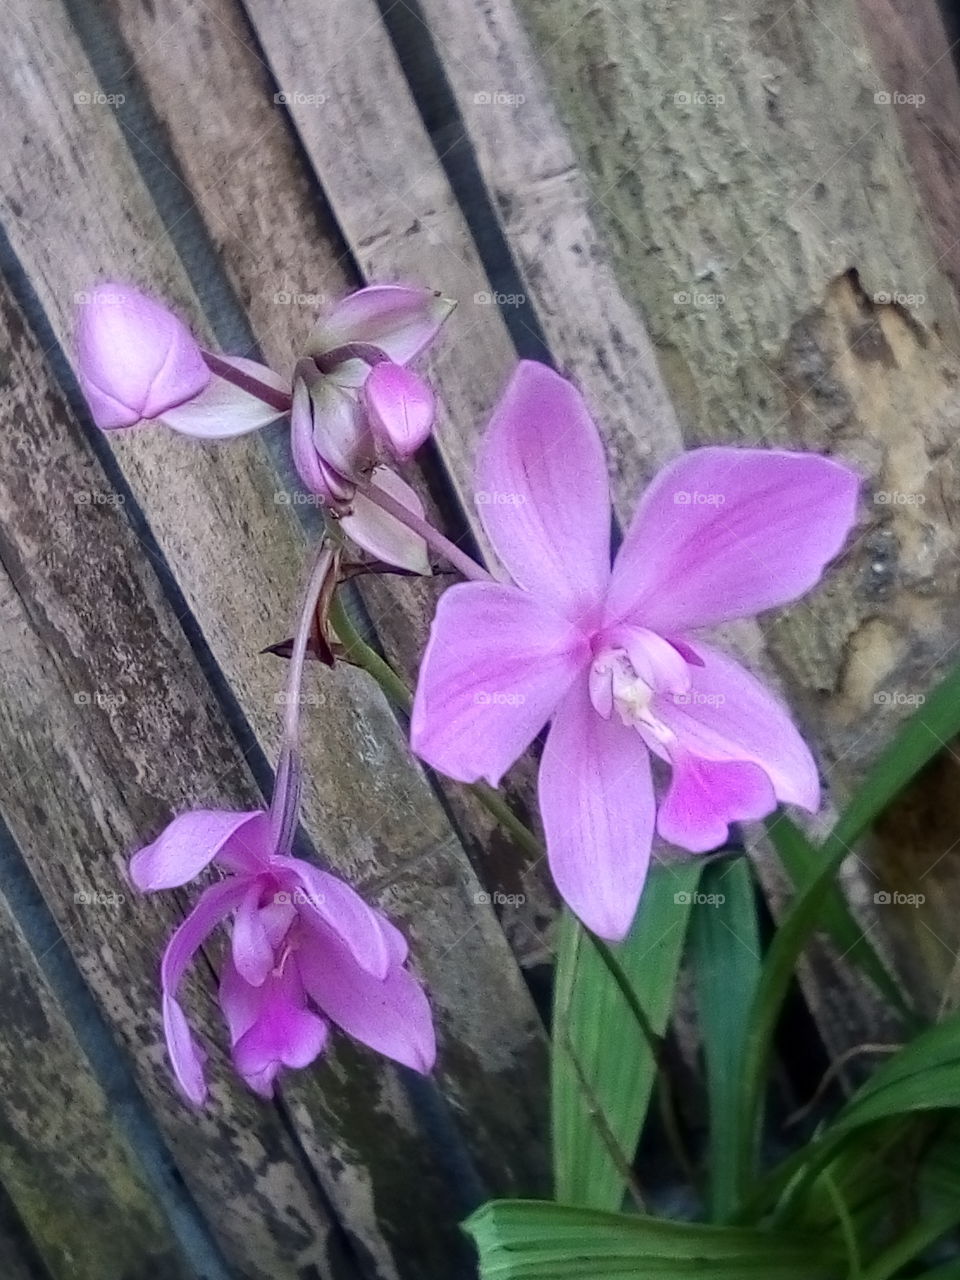 violet orchids